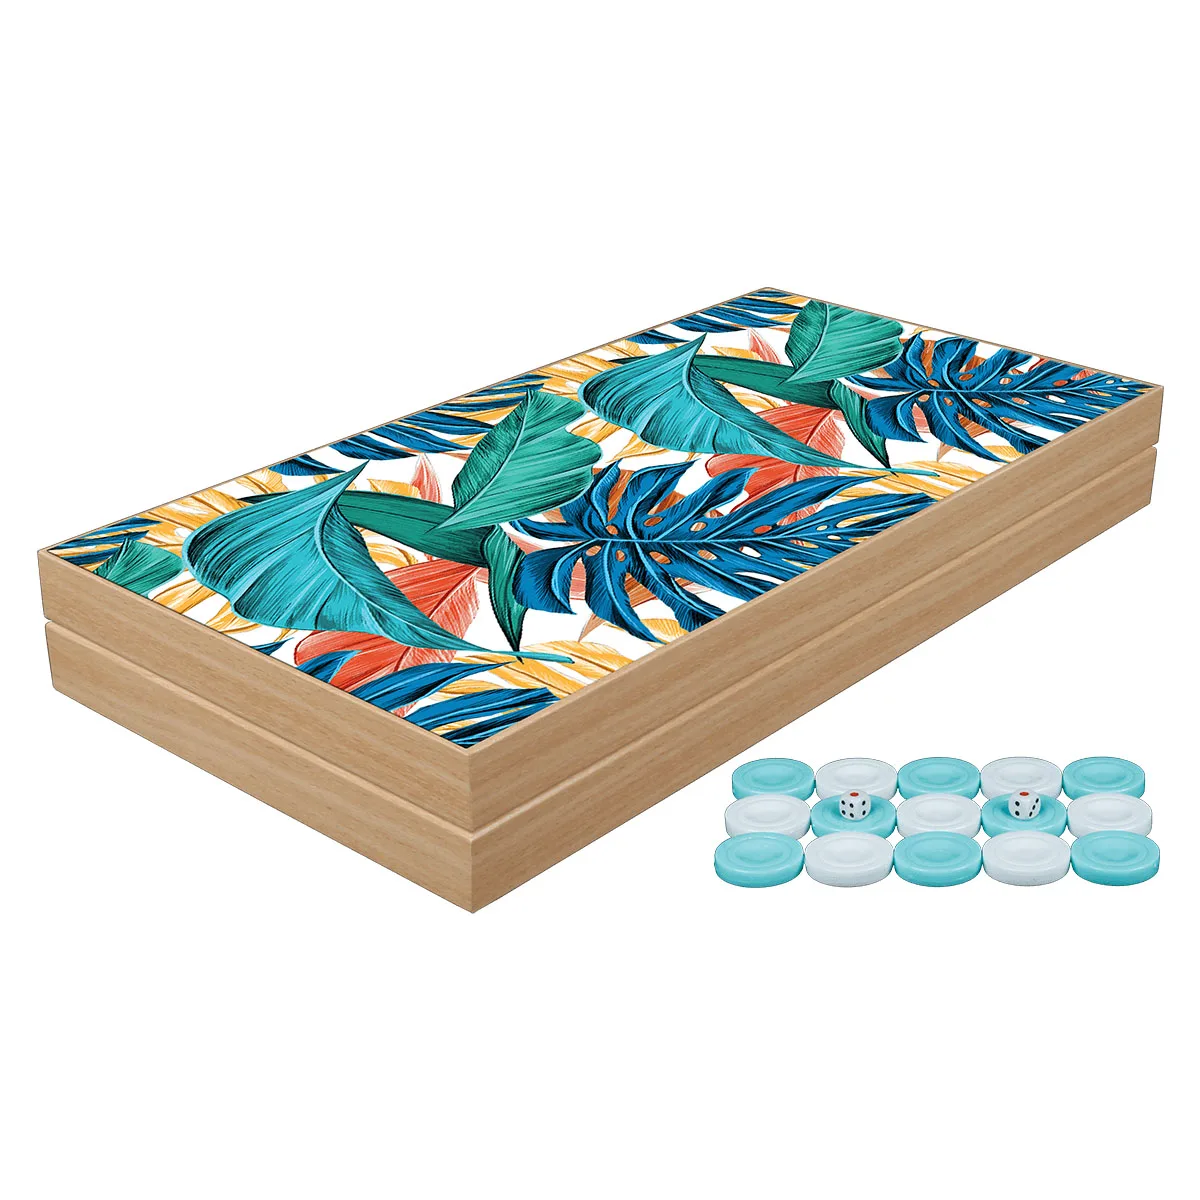 Classic Tropic Wooden Backgammon Board Game Set